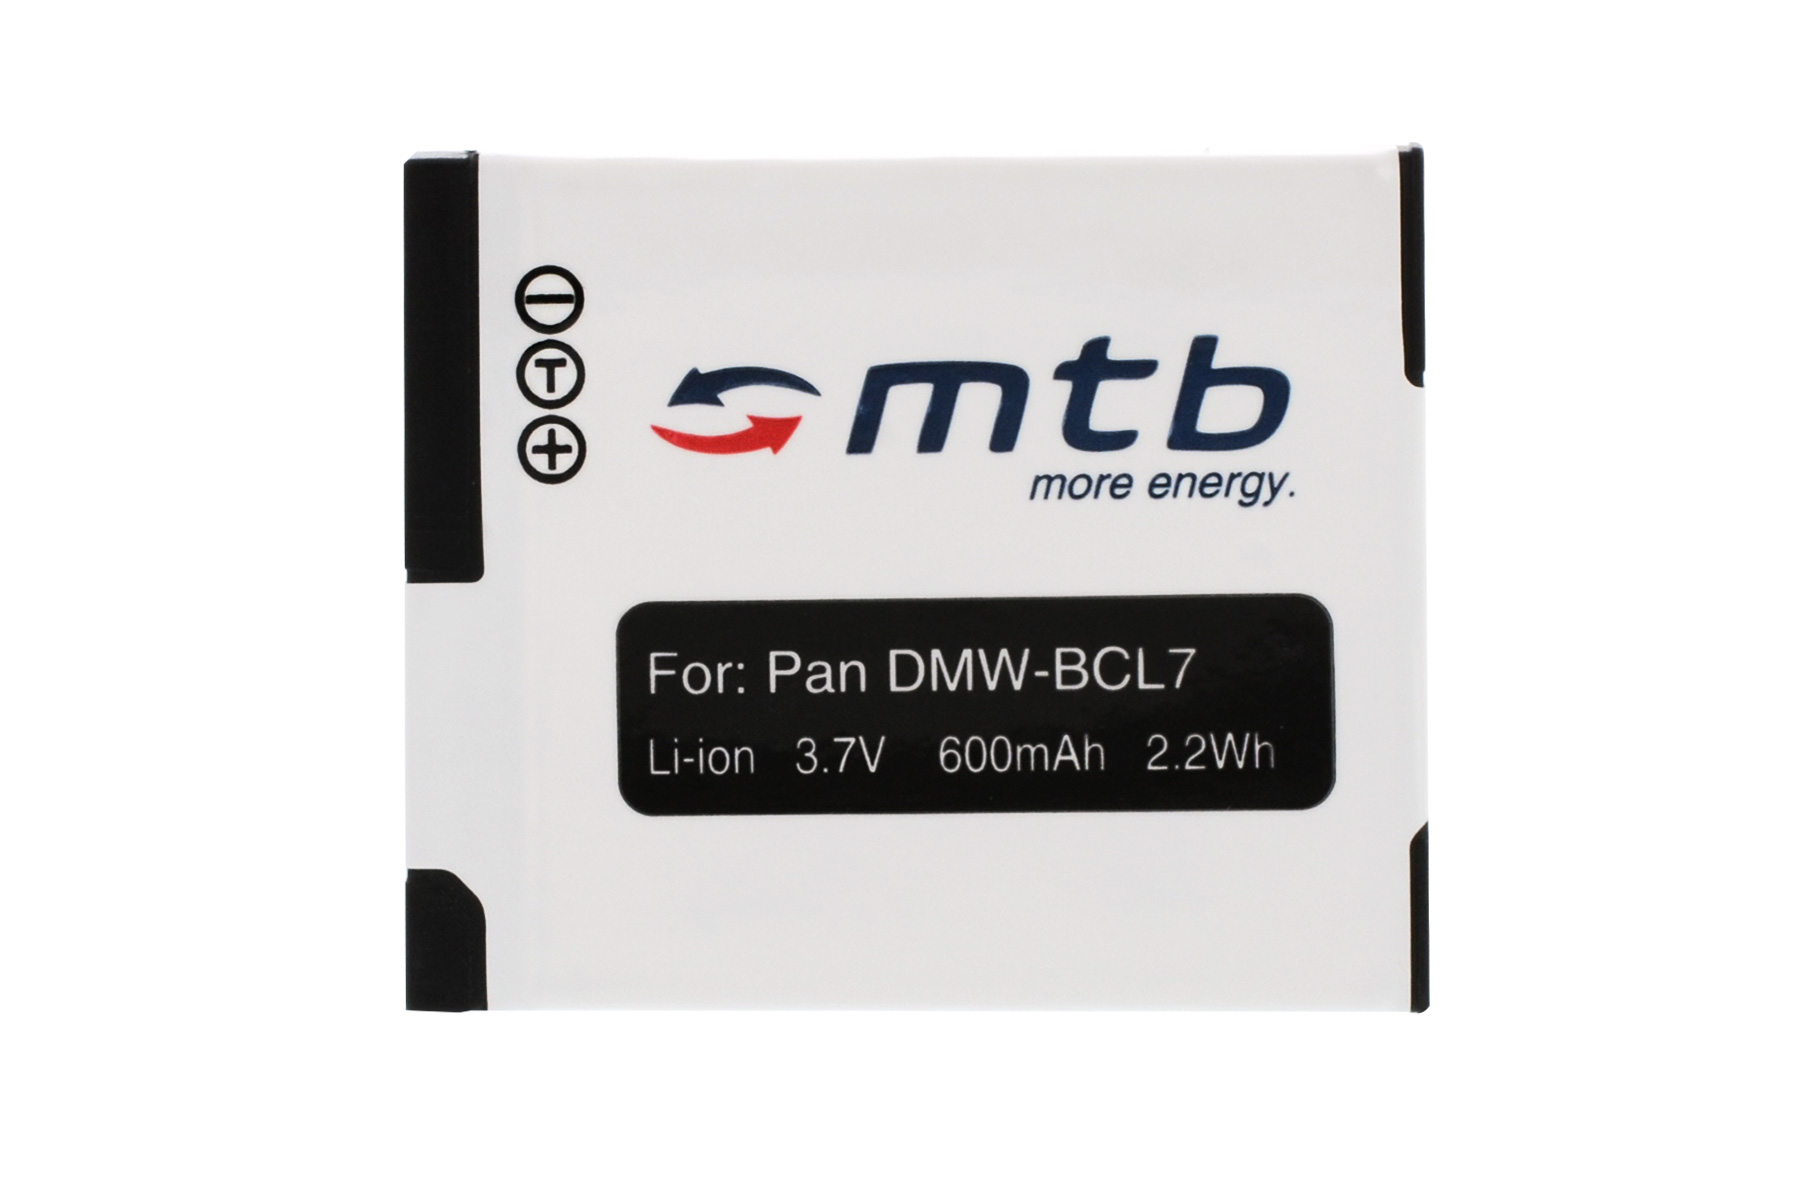 MTB MORE ENERGY BAT-373 mAh Li-Ion, 600 DMW-BCL7 Akku